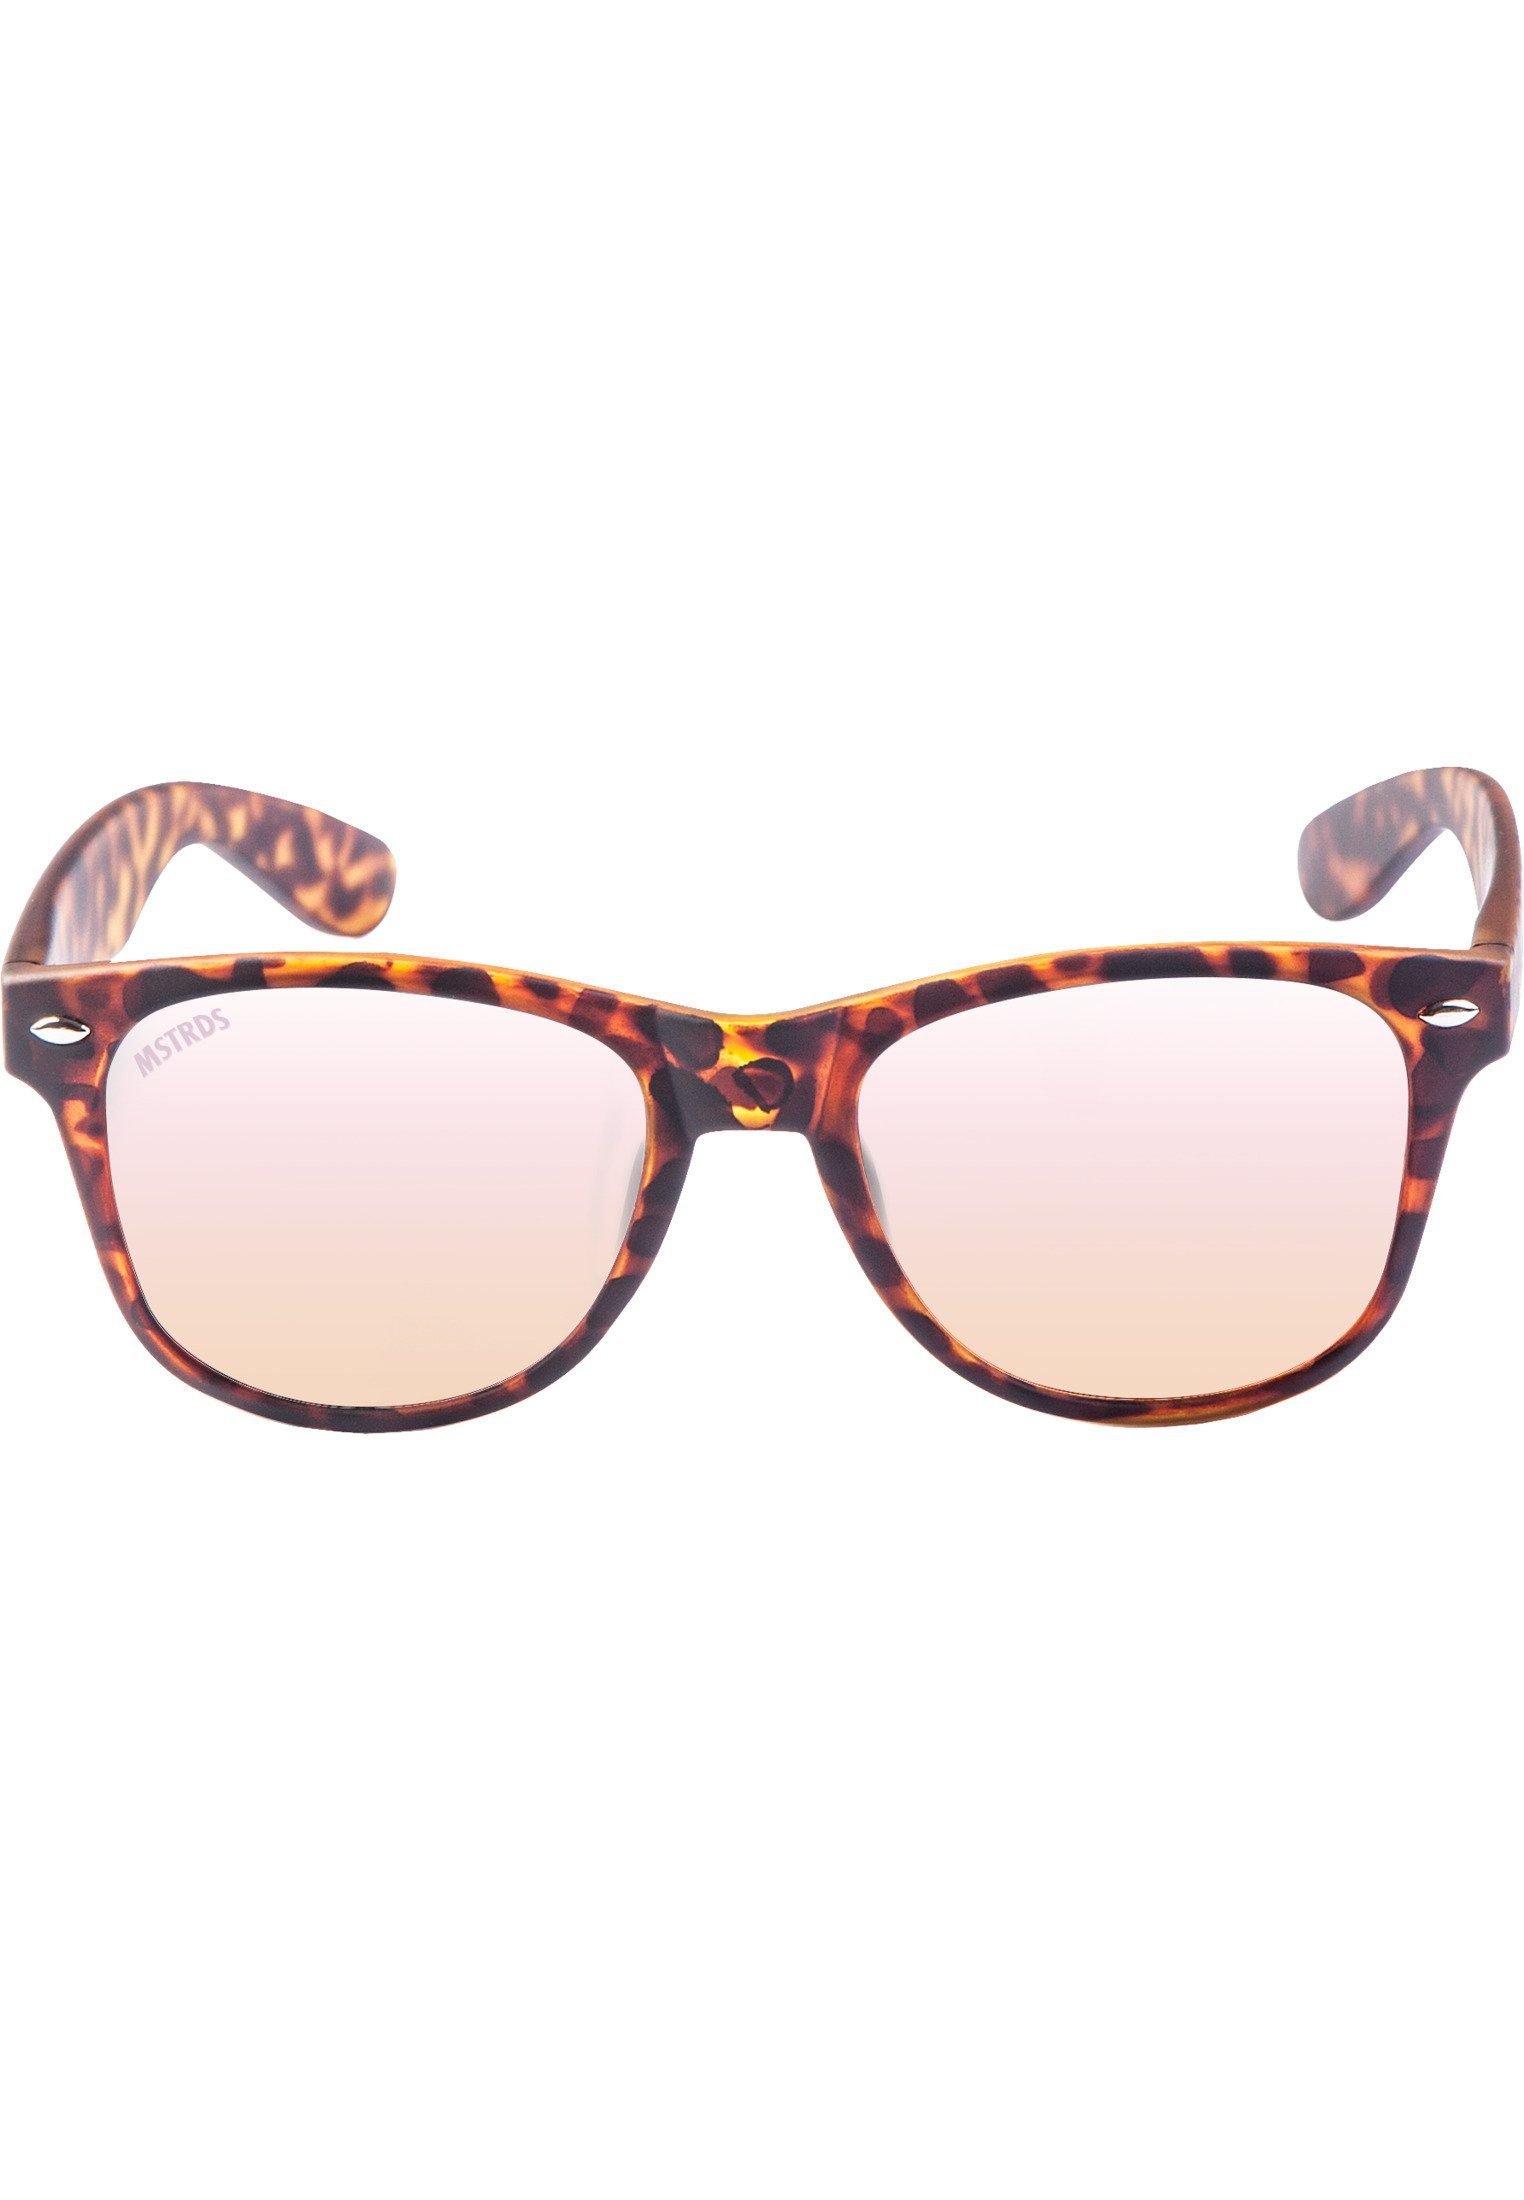 MSTRDS Sonnenbrille Accessoires Sunglasses Likoma Youth havanna/rosé